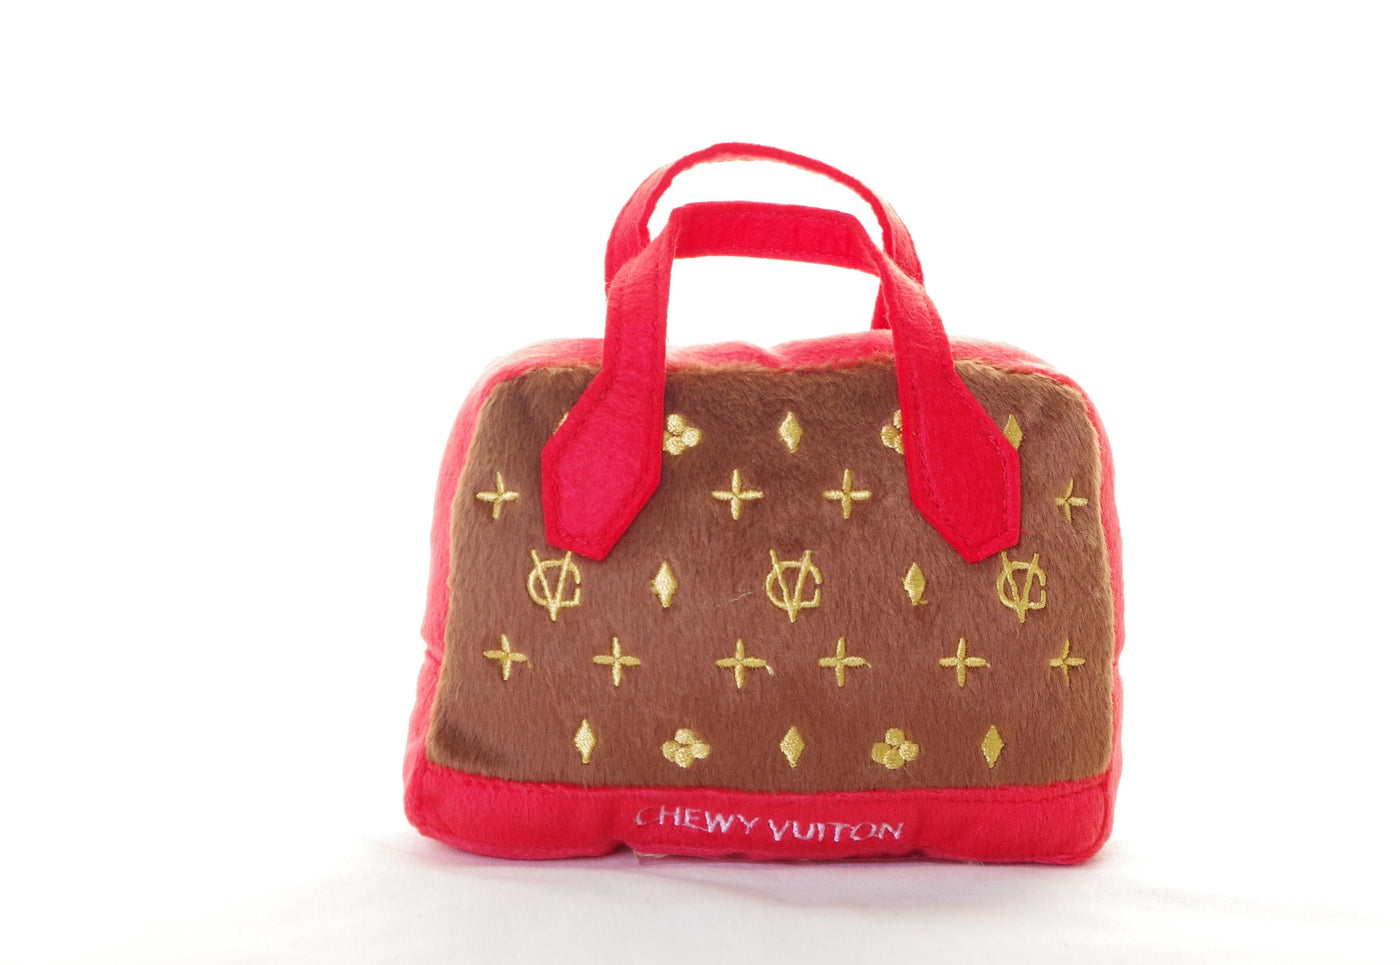 Poochy Vuiton Plush Handbag